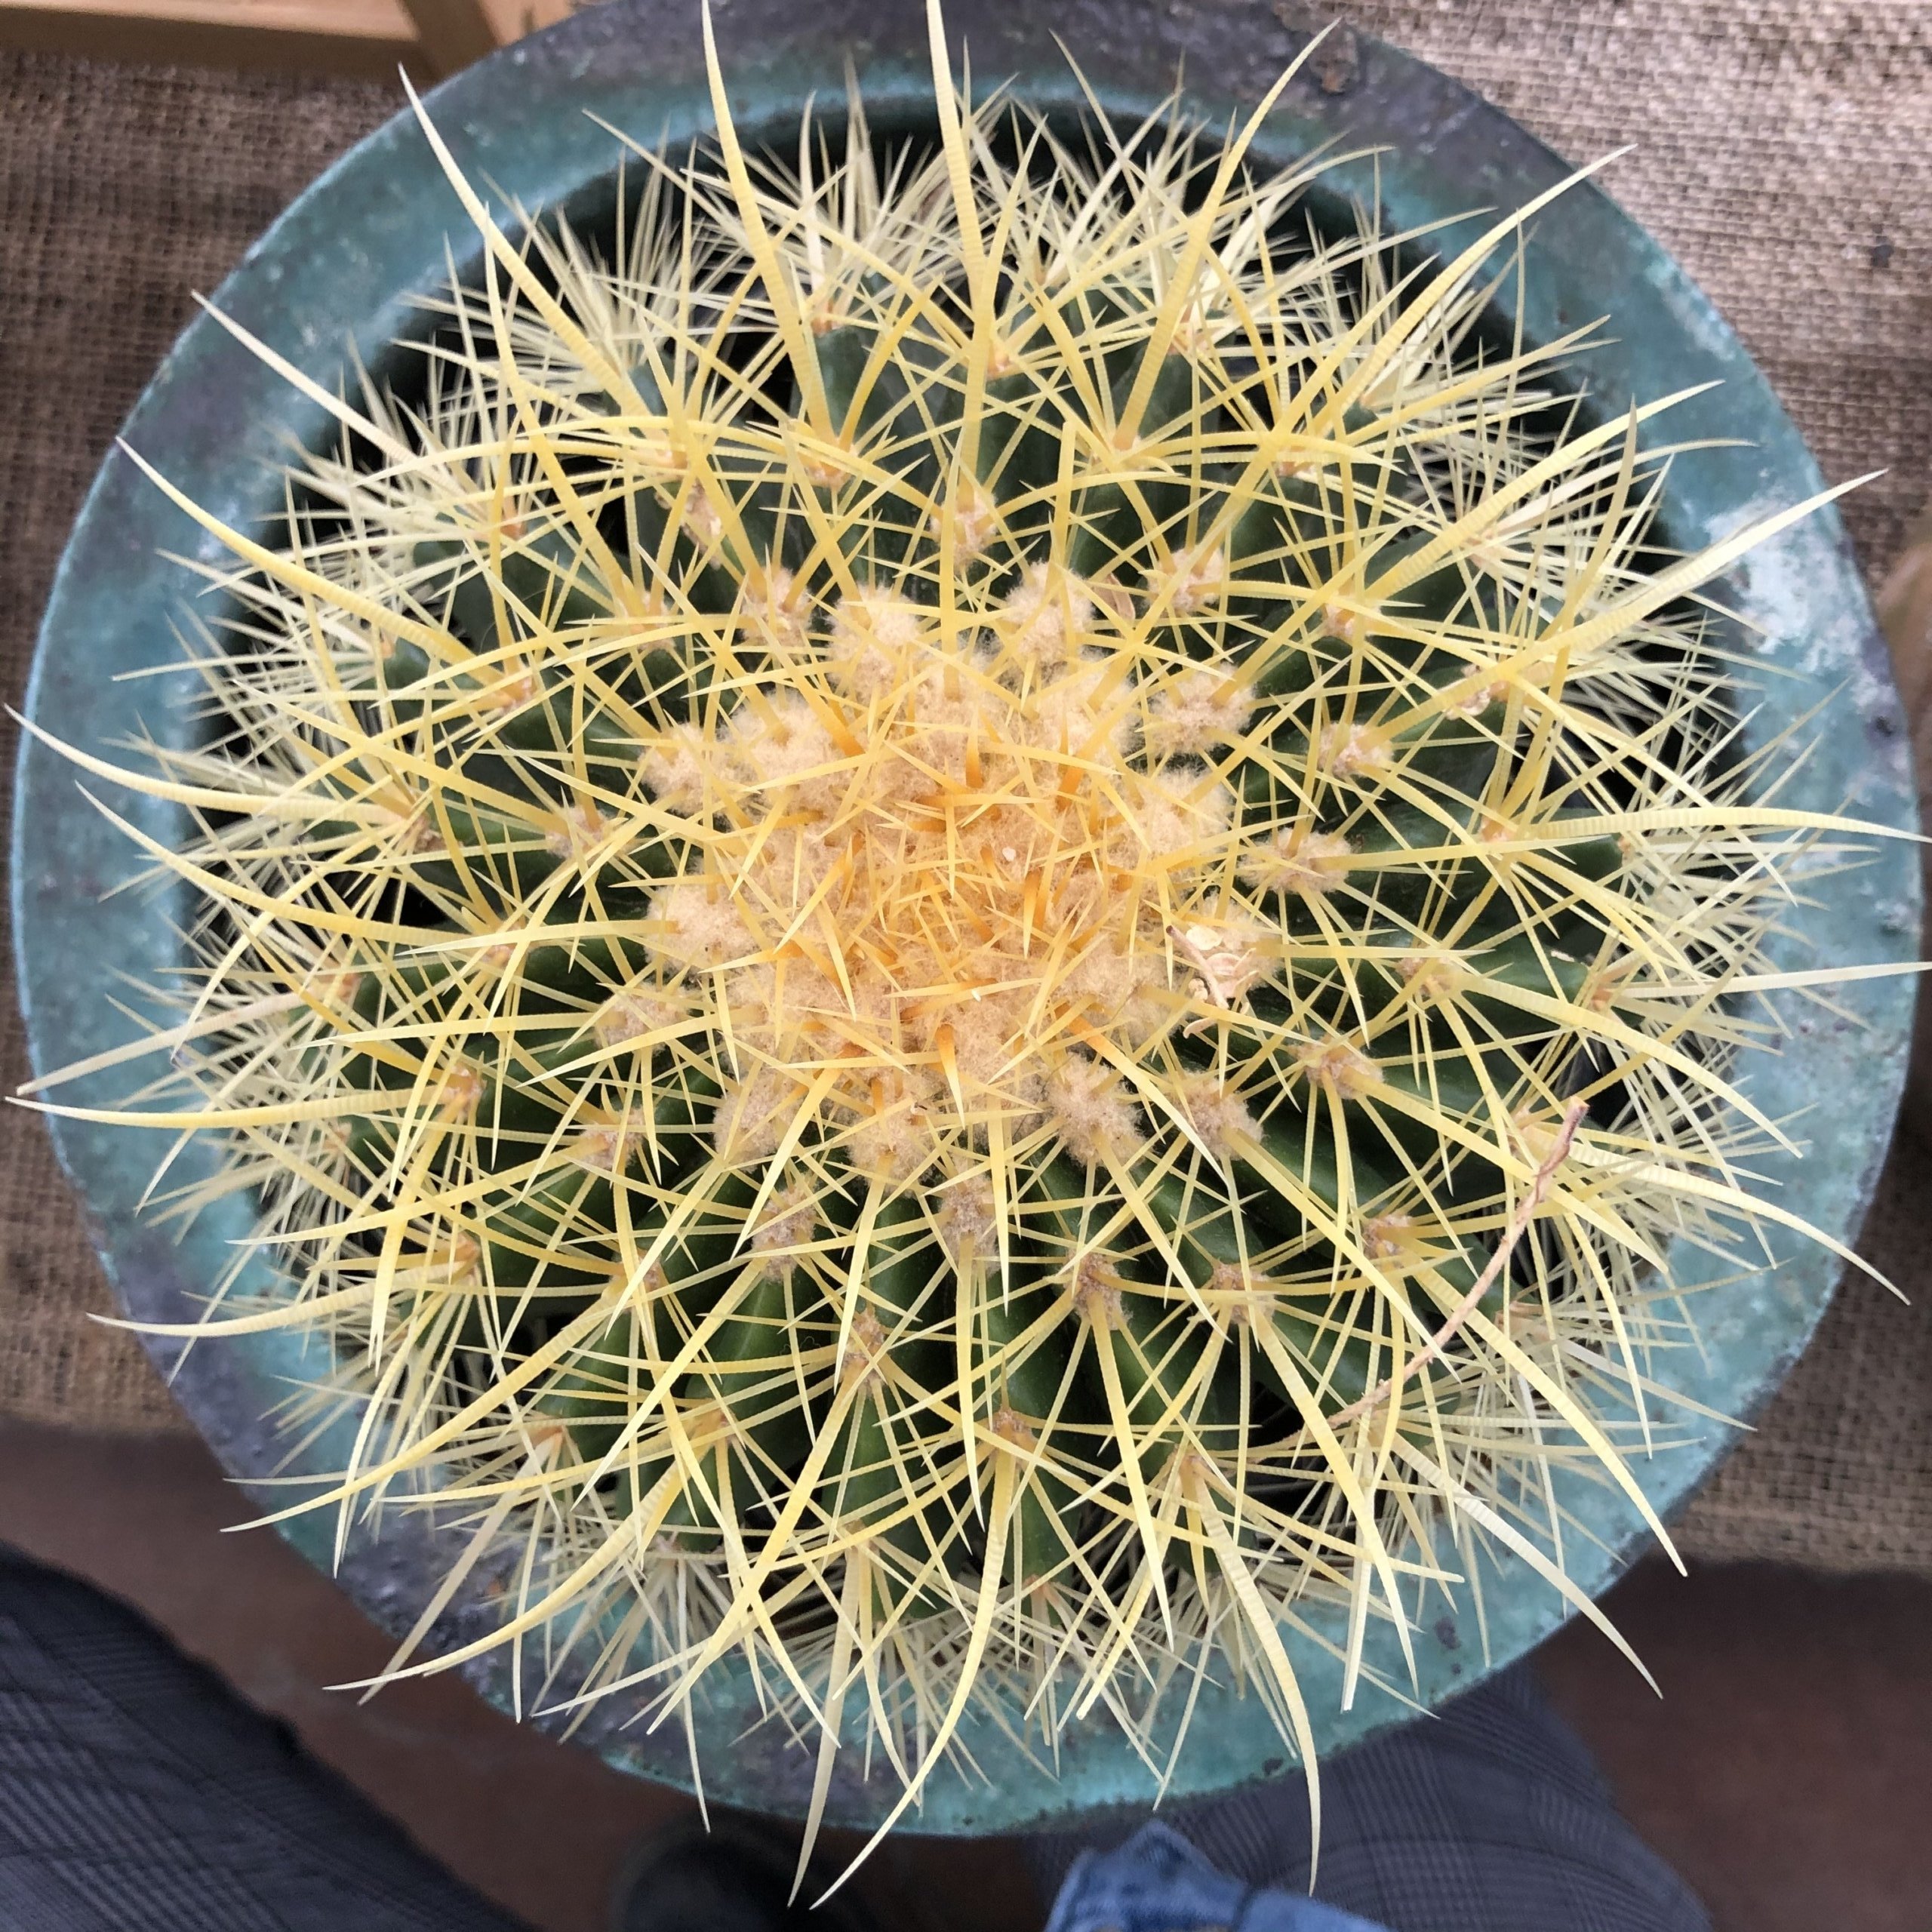 golden barrel cactus